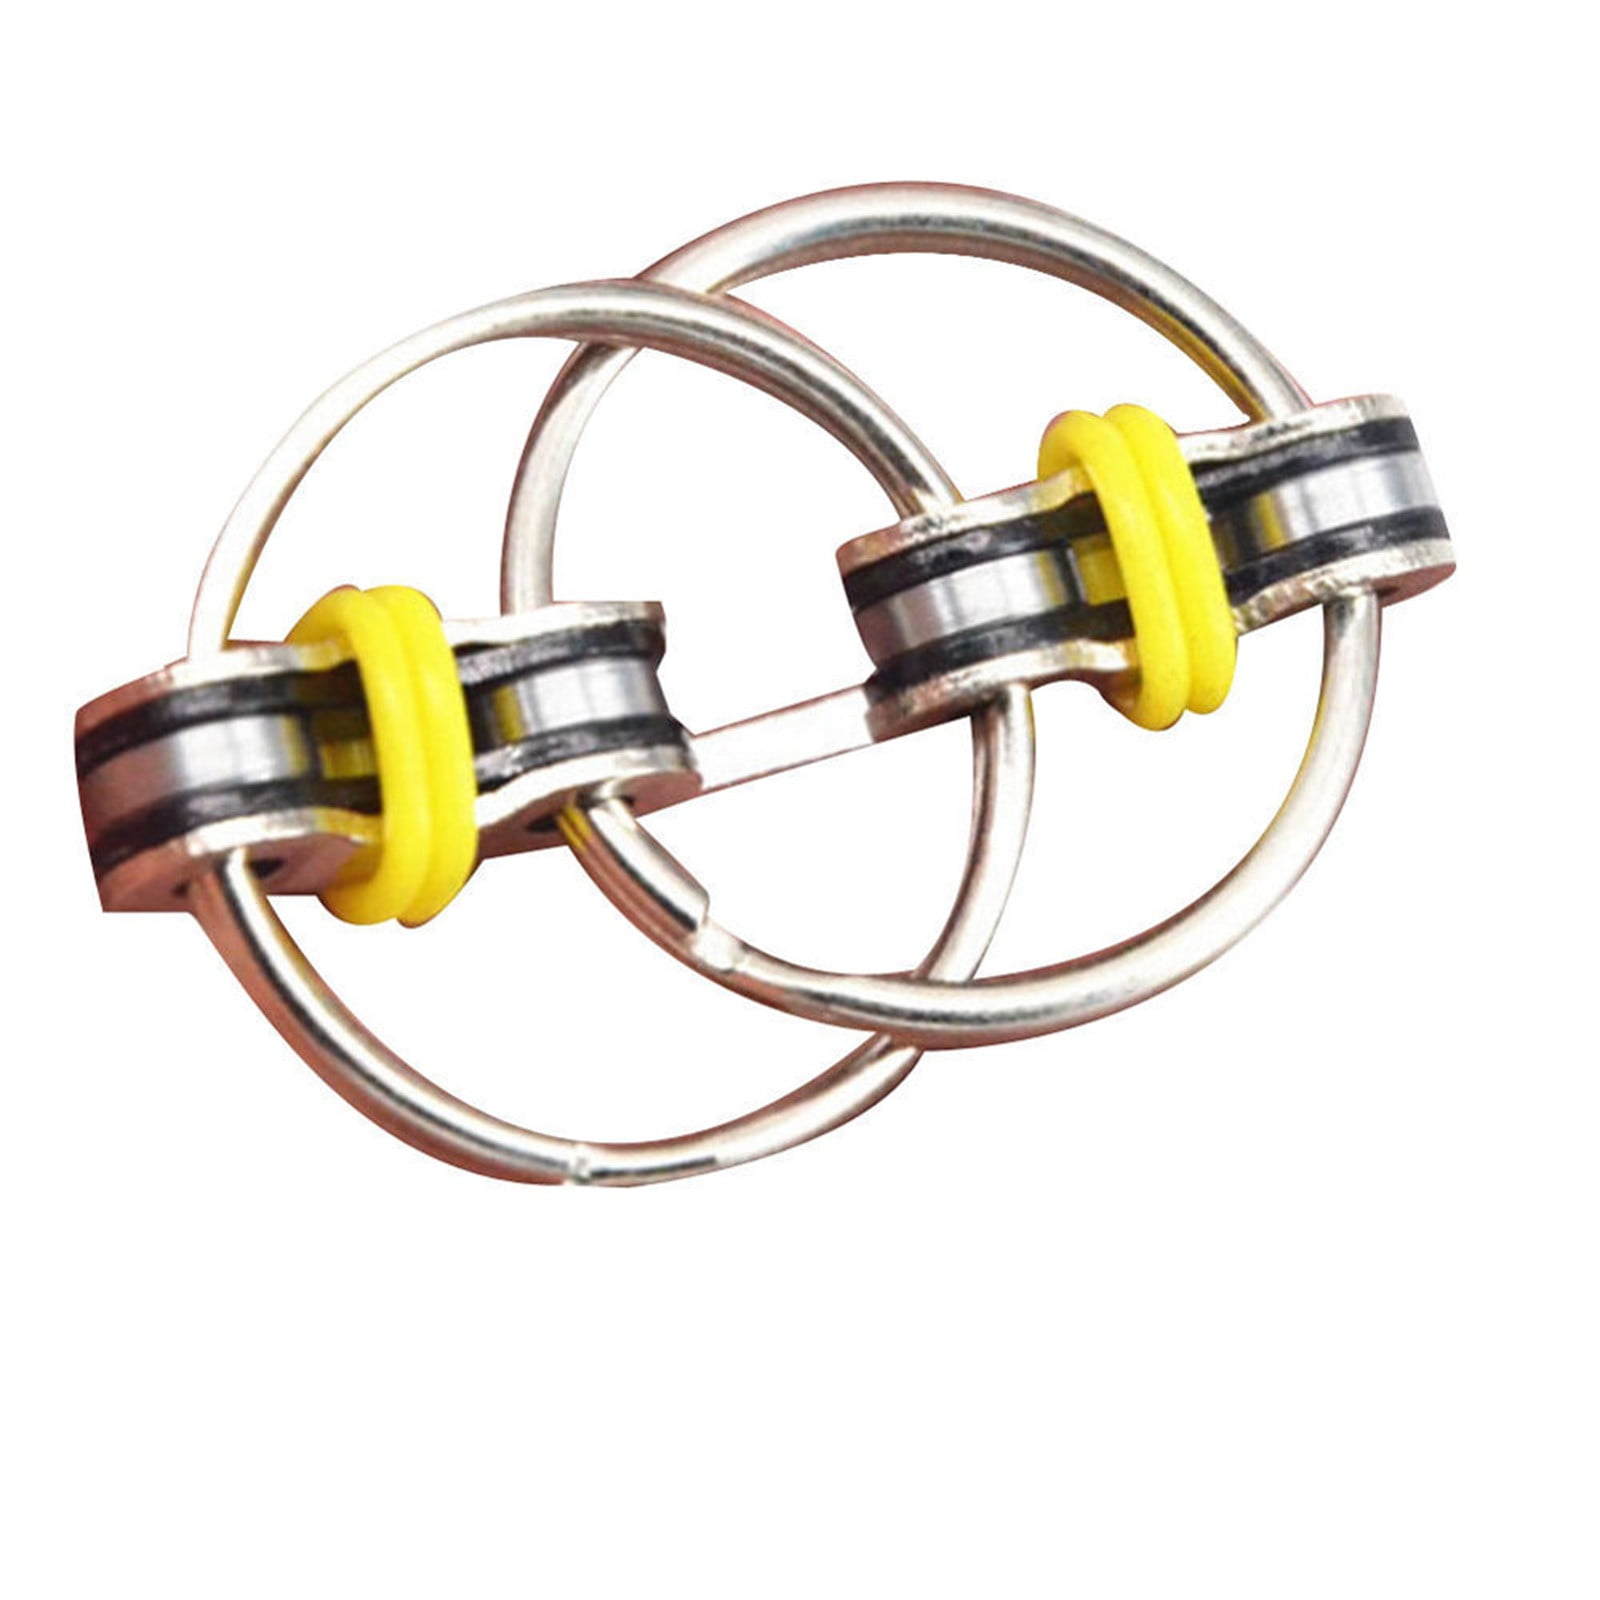 Chain Fidget Toy Hand Spinner Key Ring Sensory Toys Stress Relieve Y2T4 6U8G 